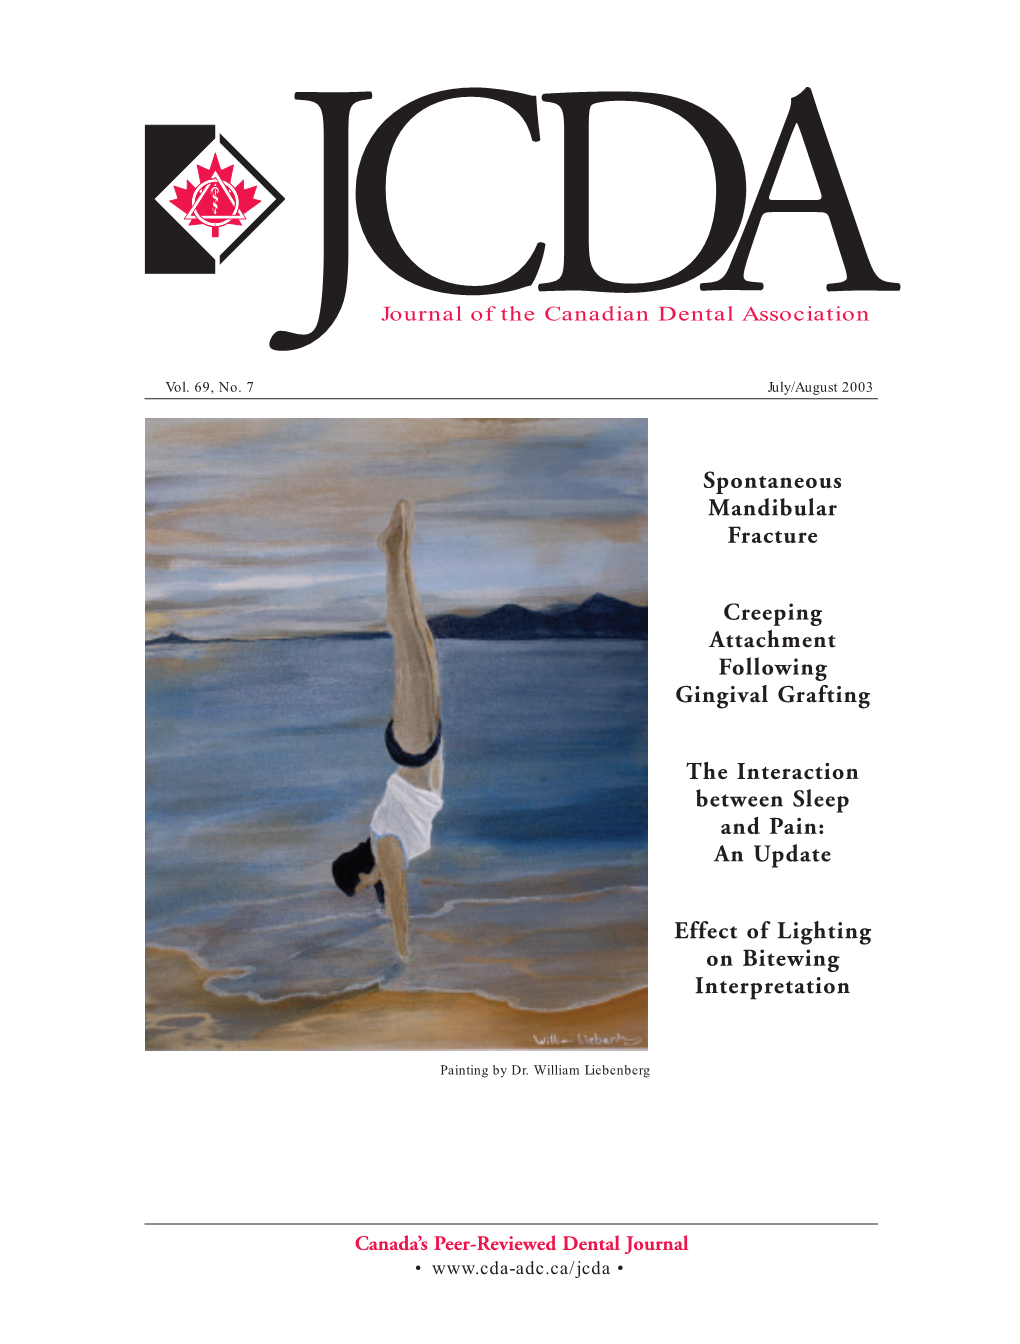 Jcdajournal of the Canadian Dental Association Vol